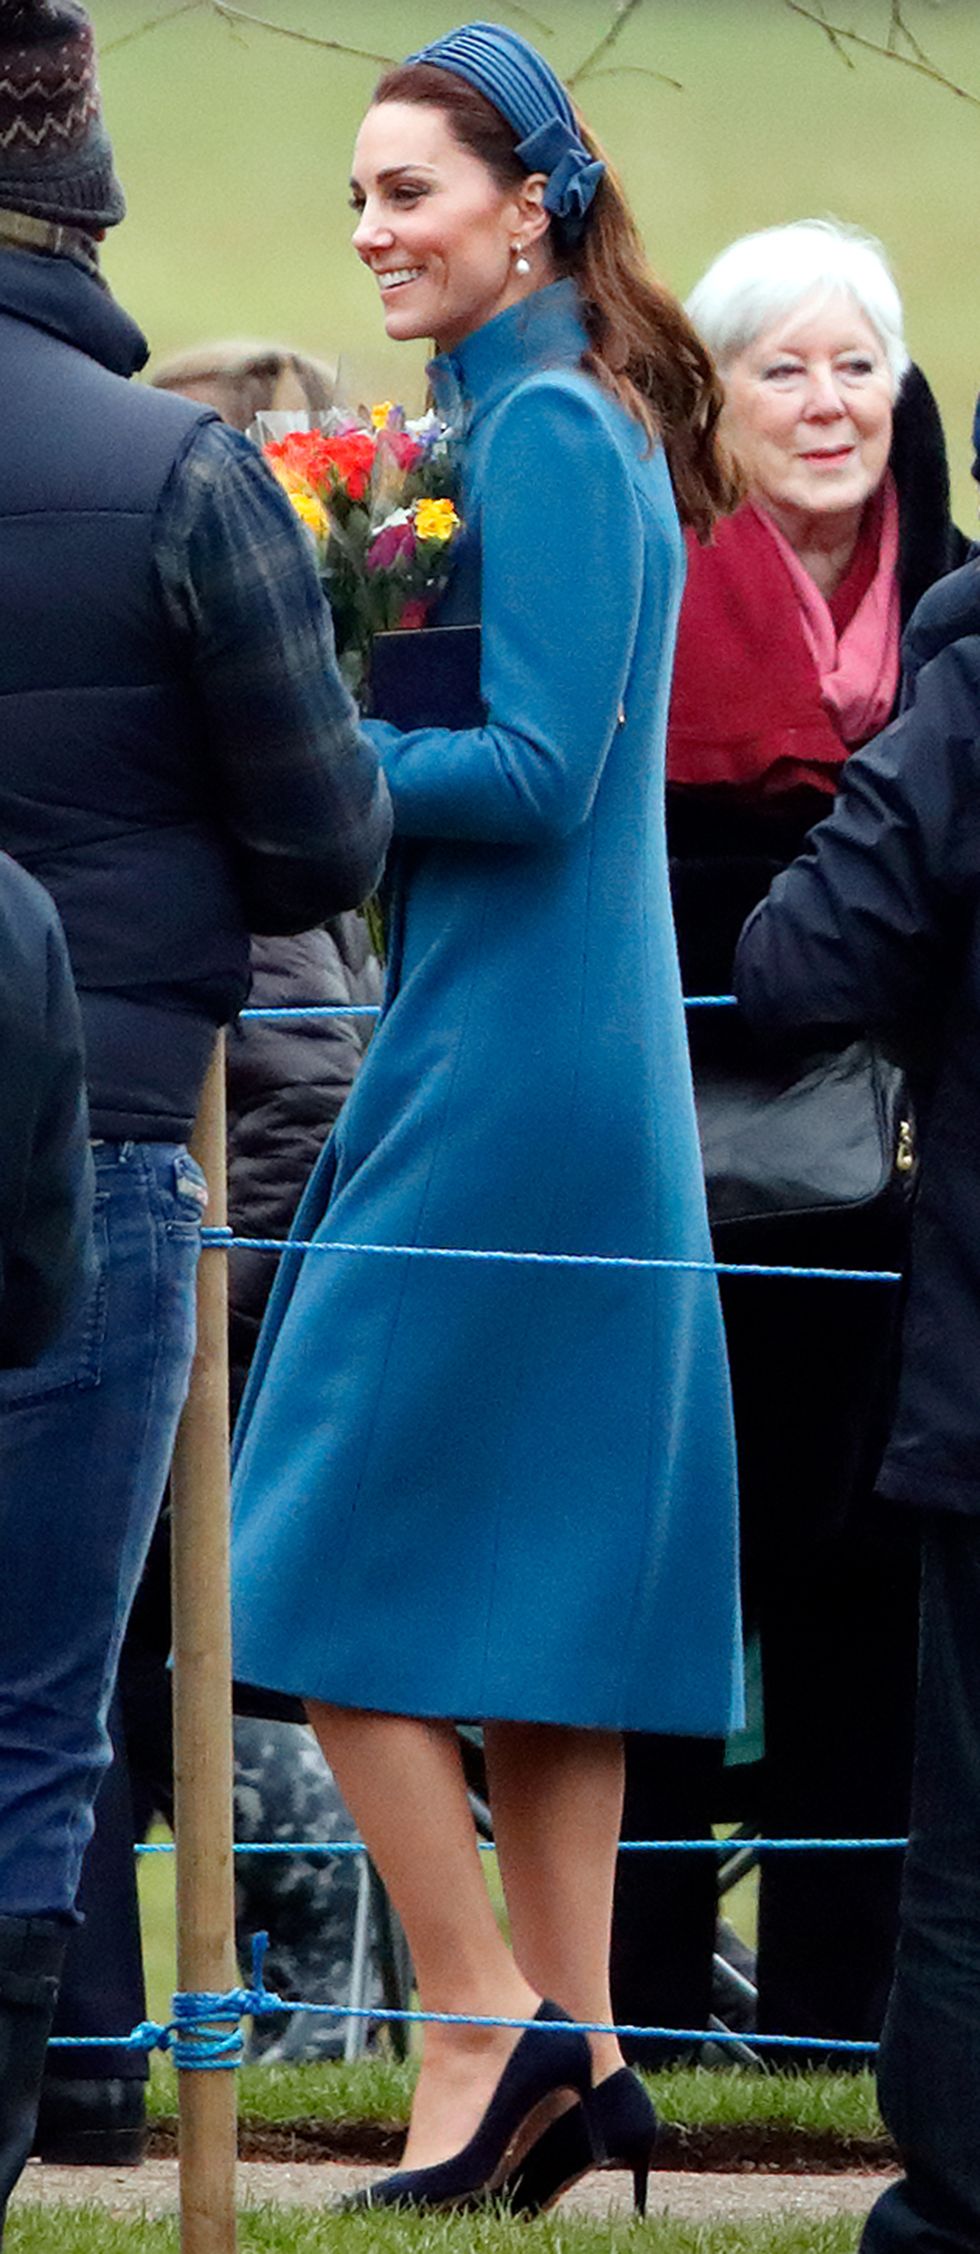 Duchess of Cambridge Sunday service 2019 blue headband and coat